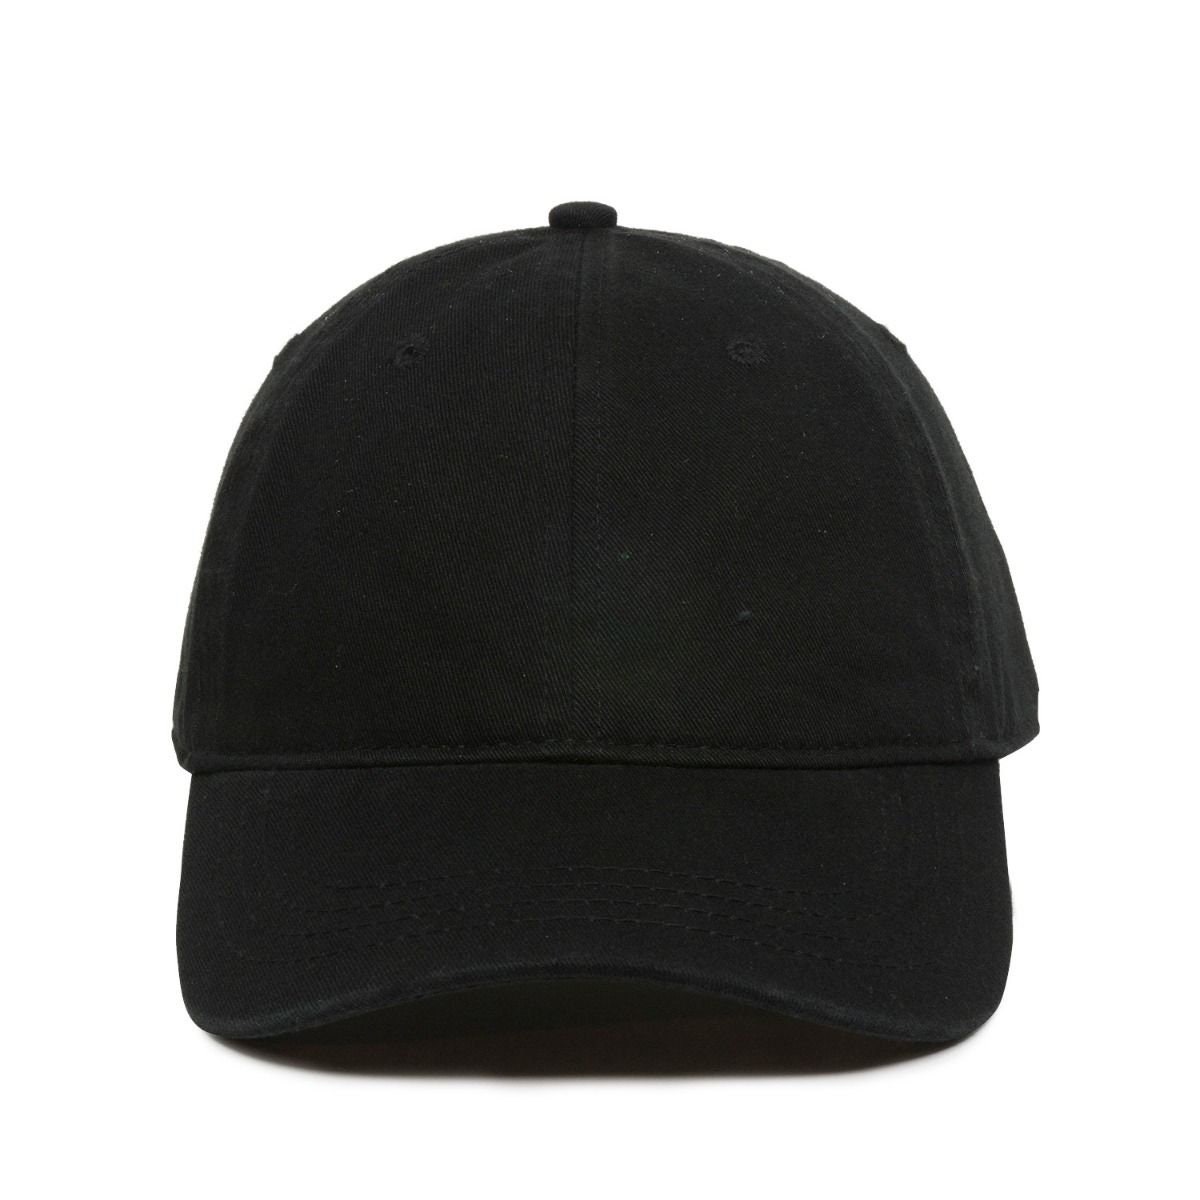 heb vertrouwen Voorkeursbehandeling etiket Plain Black Hat - Etsy